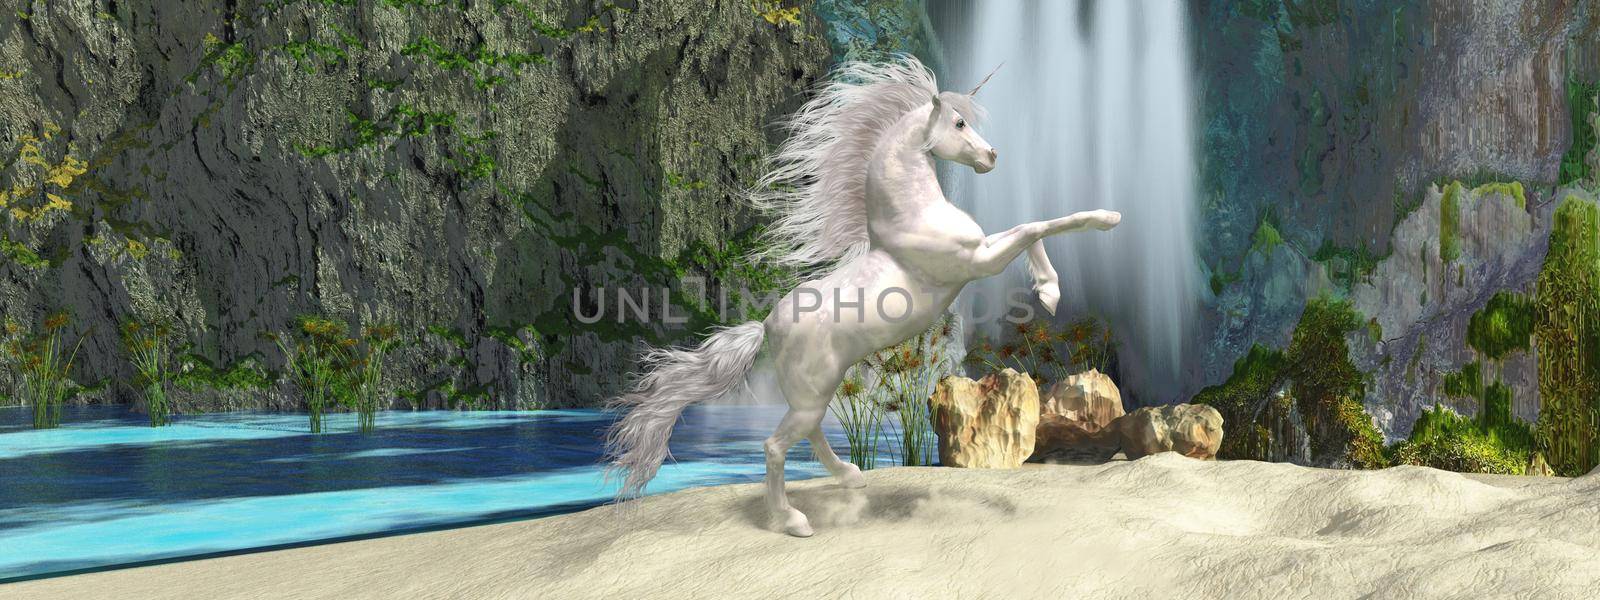 Unicorn Waterfall by Catmando